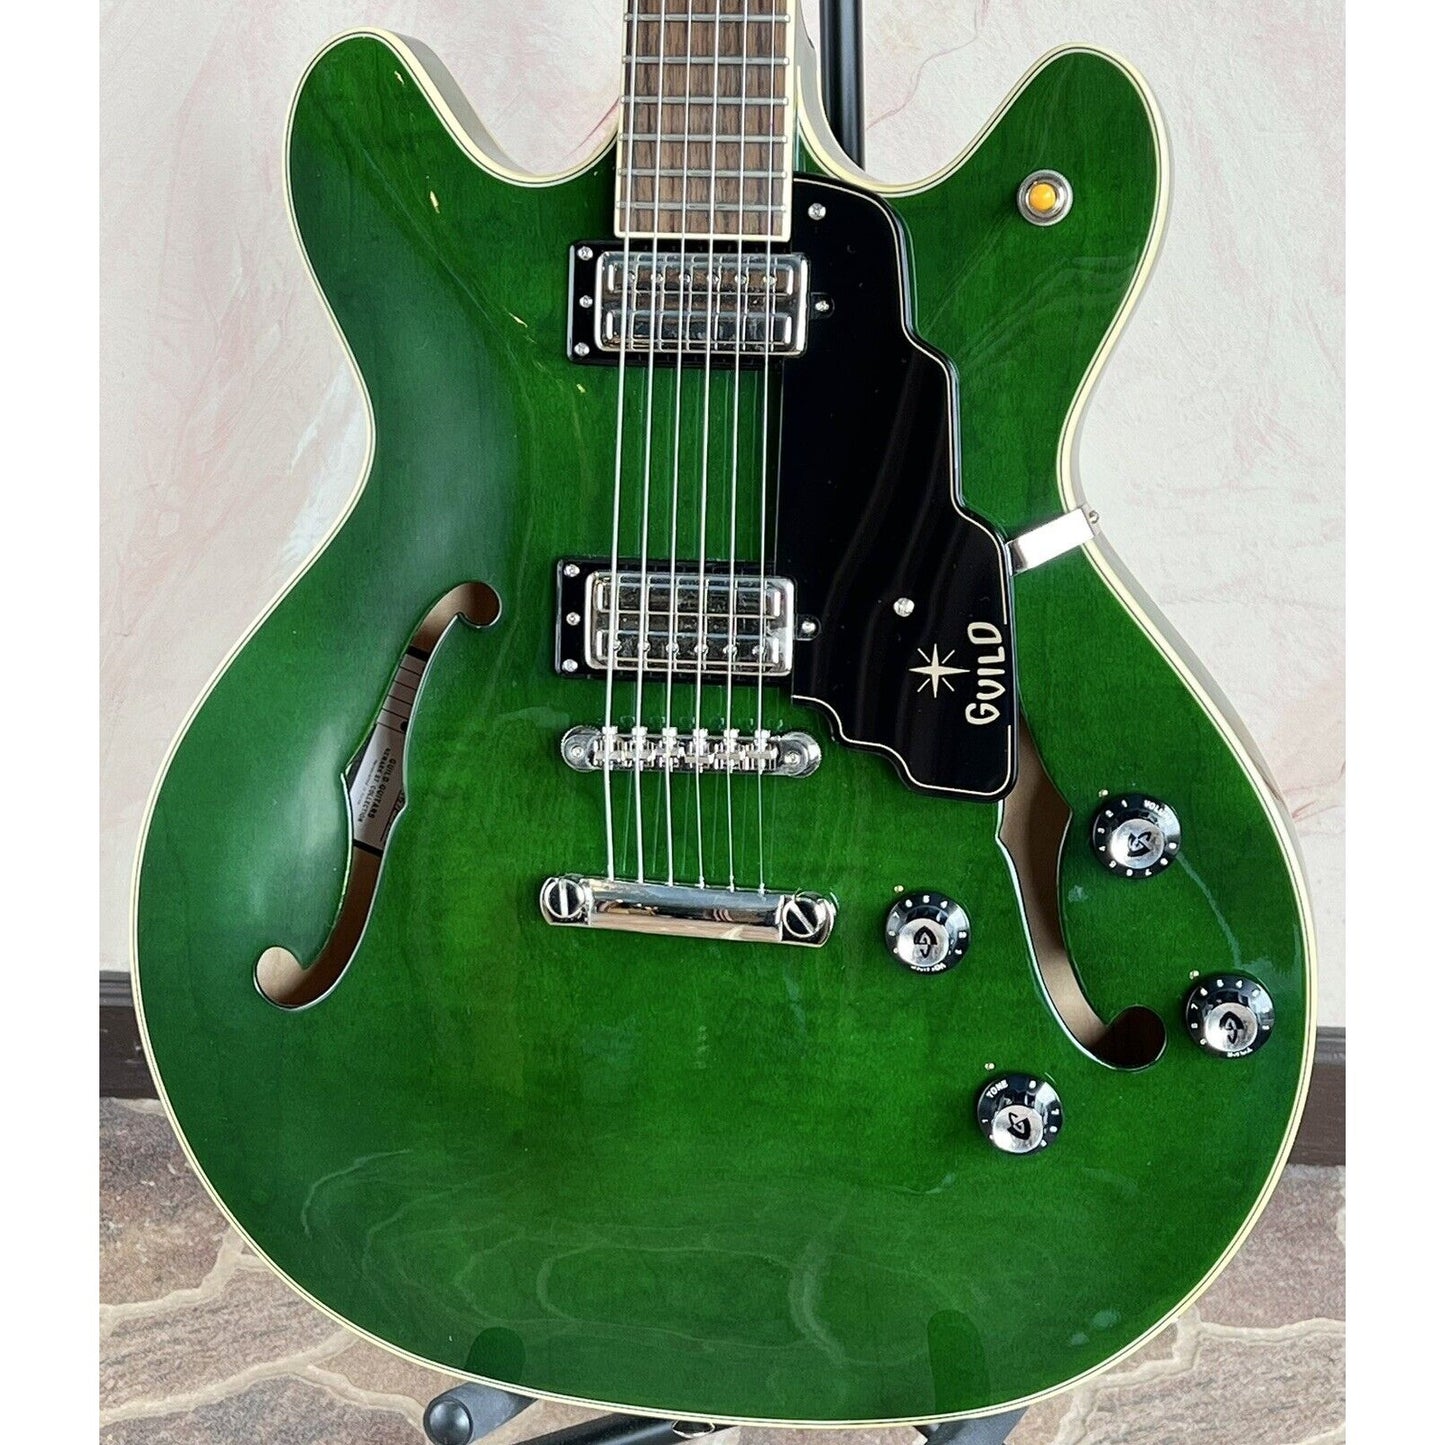 Guild Starfire SF IV ST Maple Semi Hollow Body Electric Guitar - Emerald Green